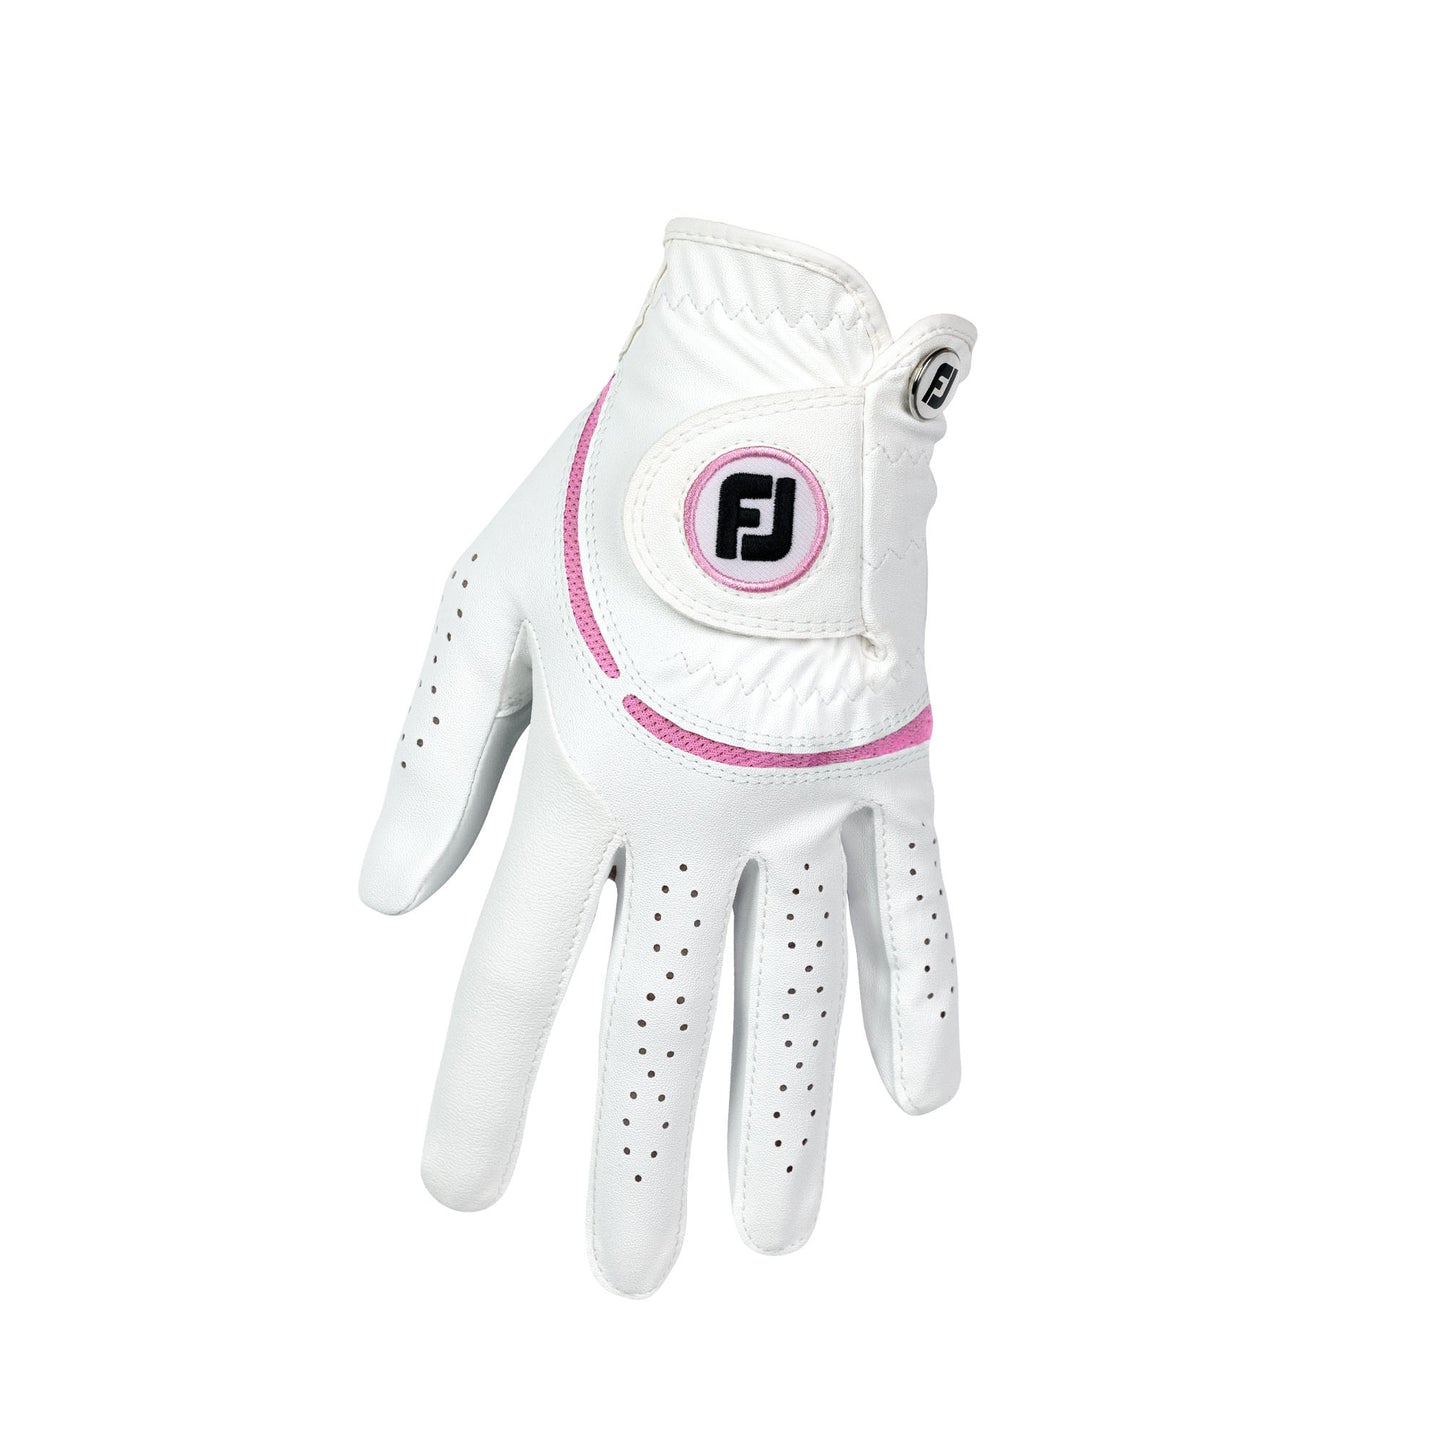 FootJoy Women's WeatherSof Golf Glove in White & Pink